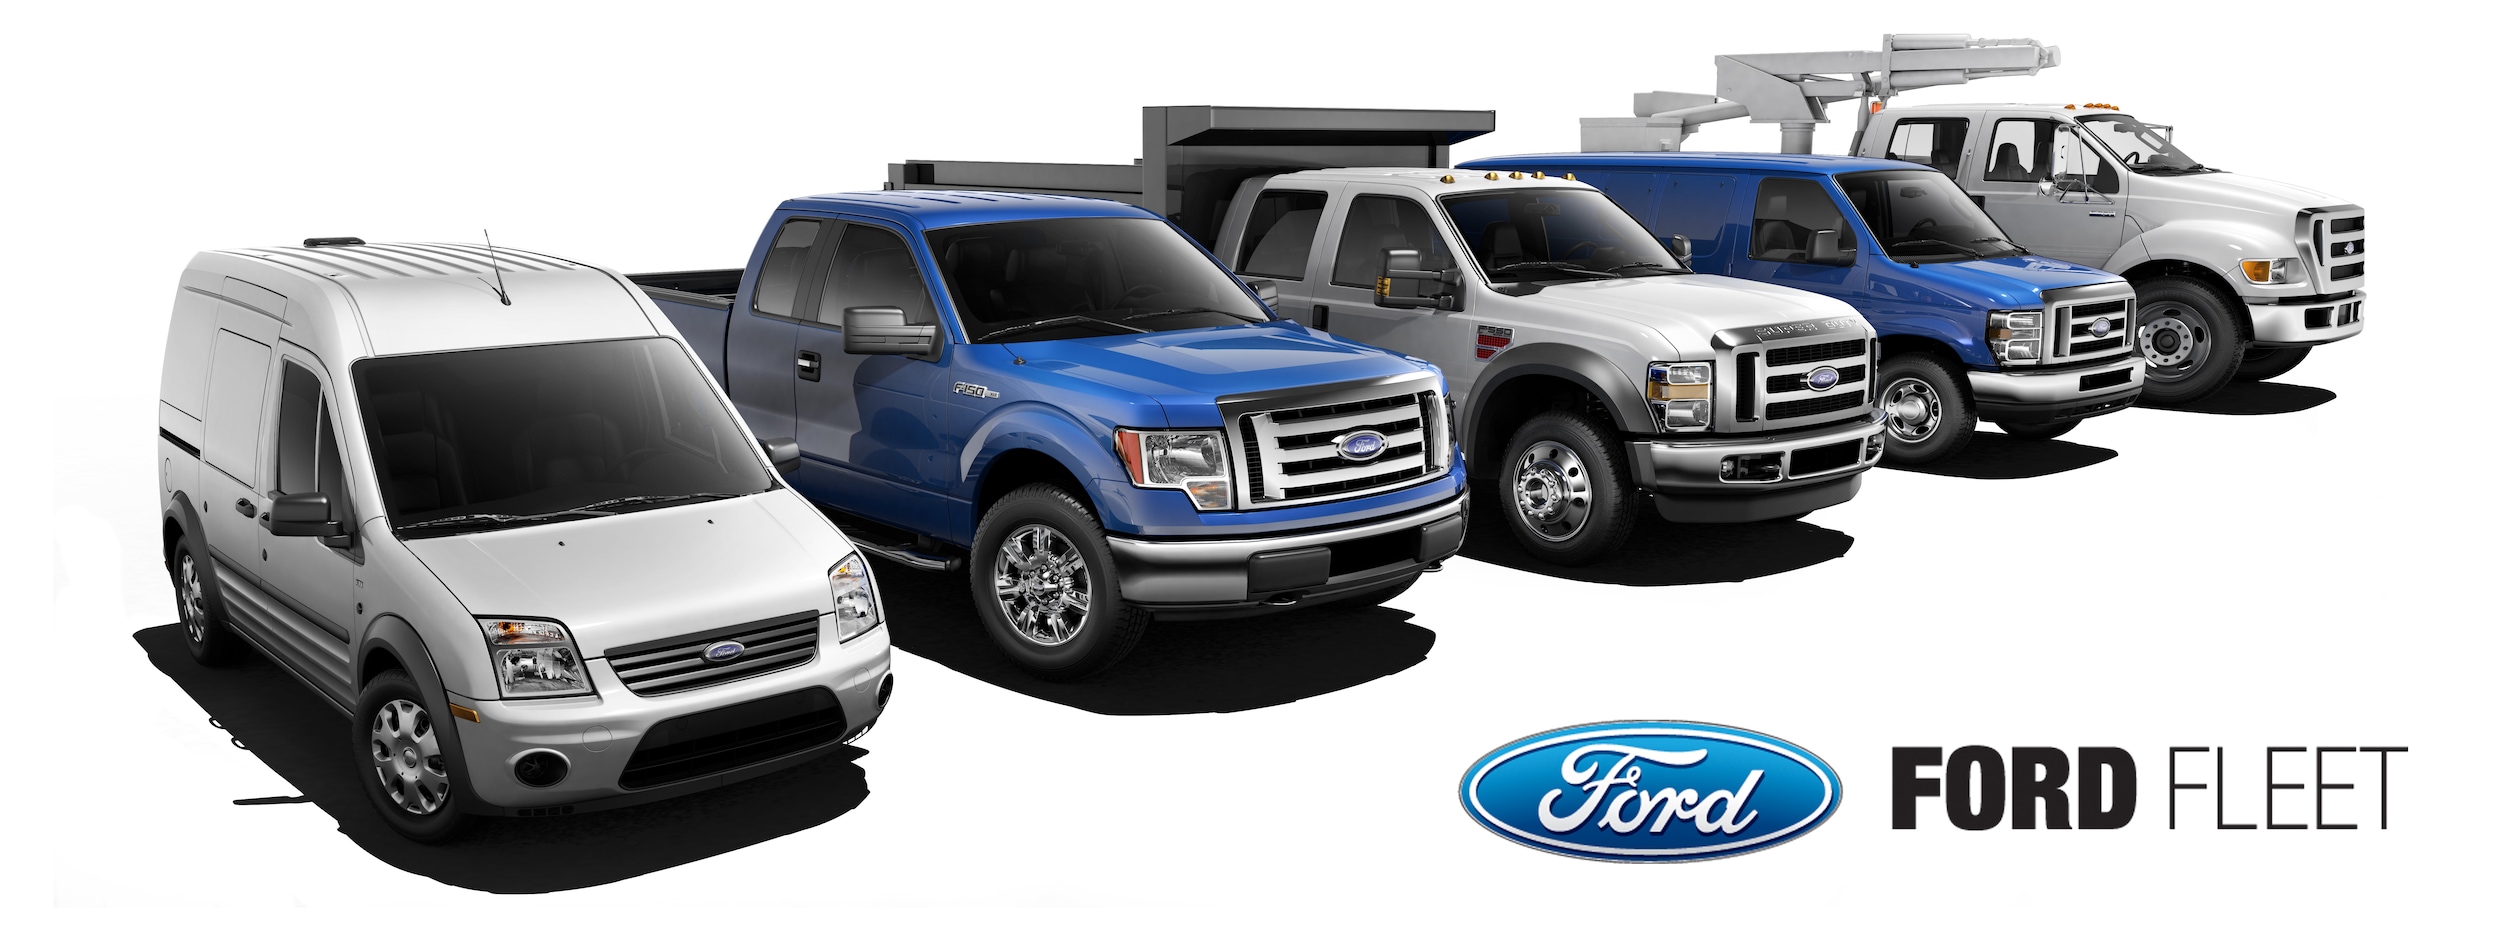 Ford quality fleet care program #4